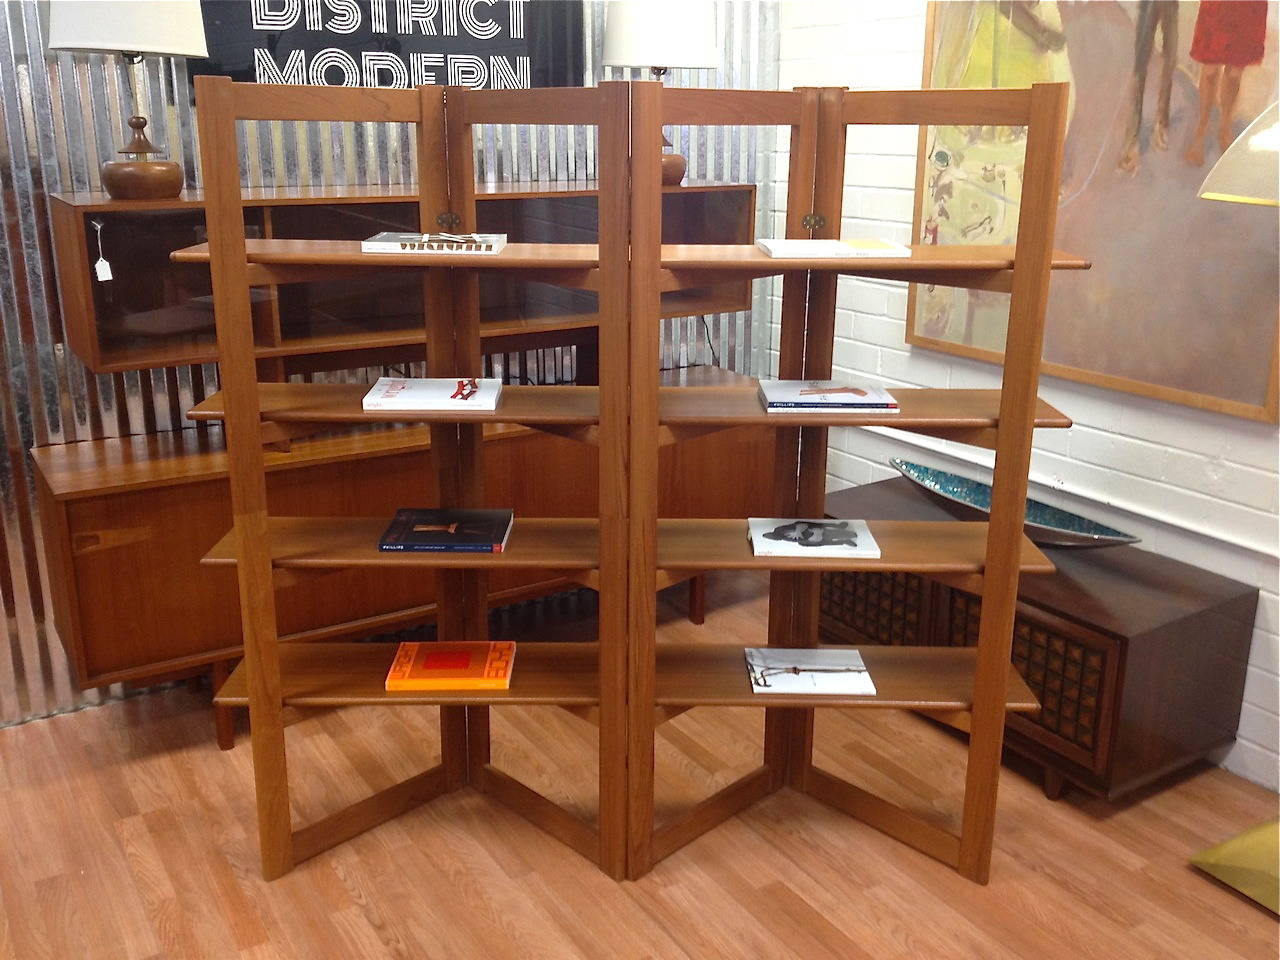 Danish modern teak freestanding room divider bookshelf. Very nice original condition.